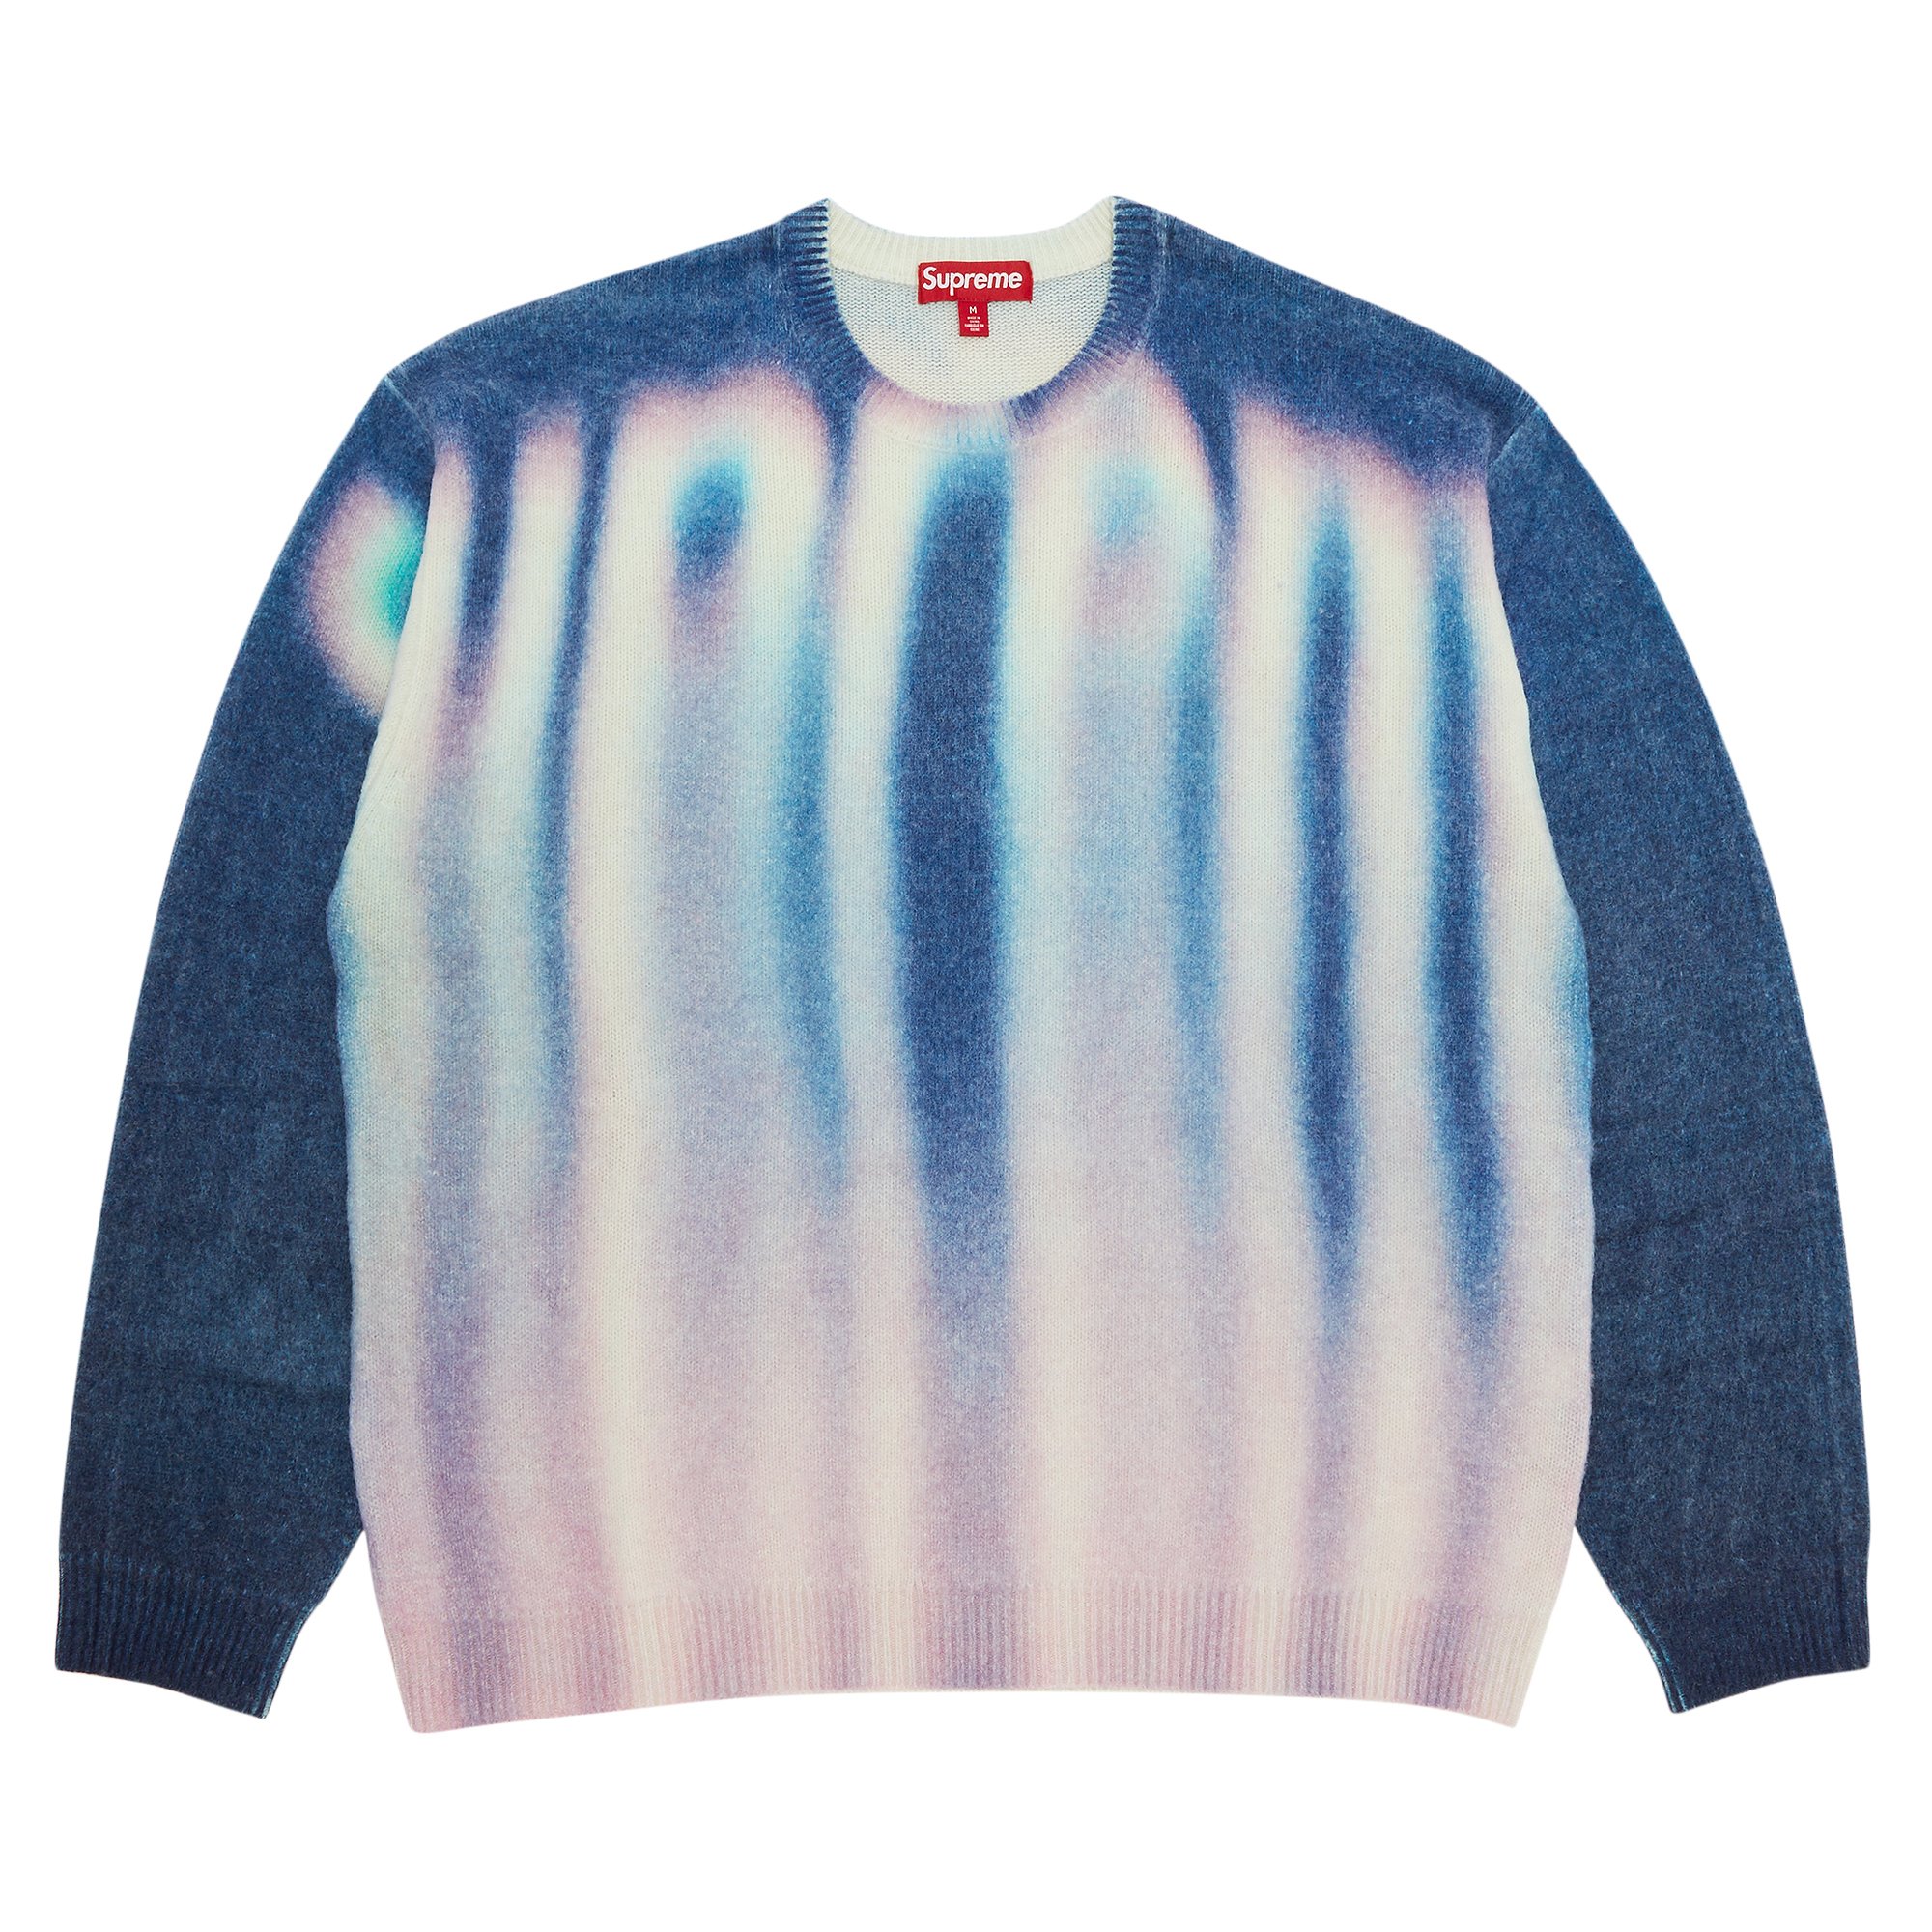 Buy Supreme Blurred Logo Sweater 'Blue'   FWSK BLUE   GOAT